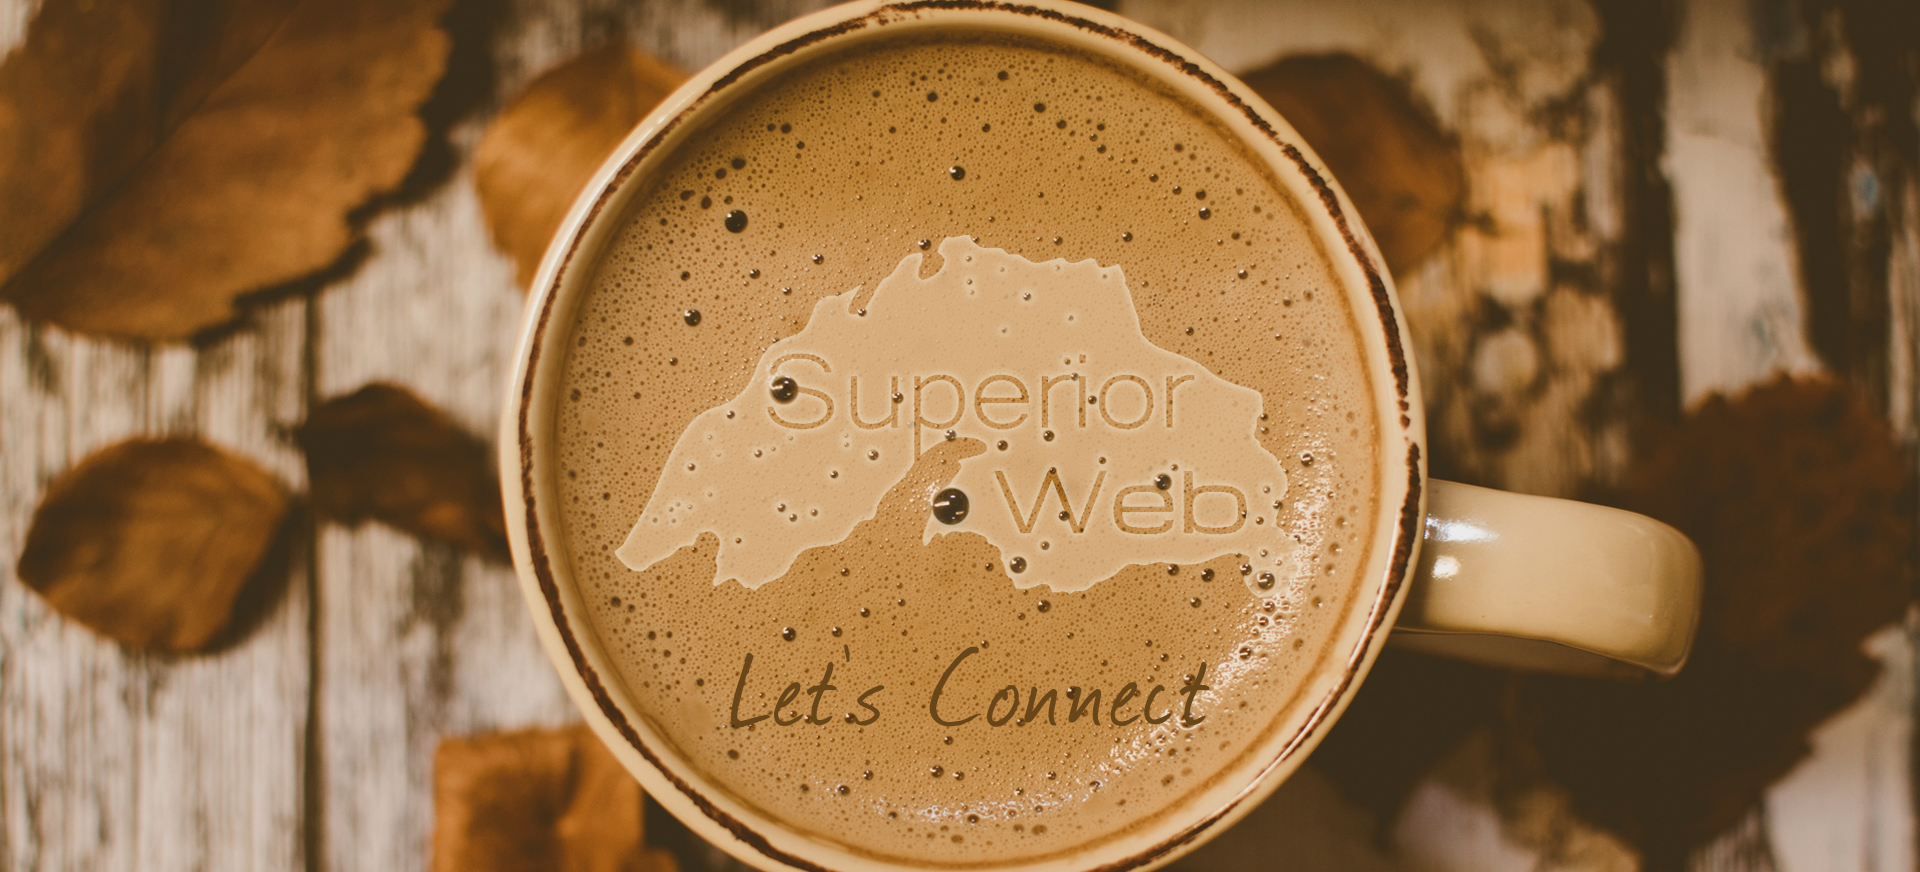 Superior Web logo in coffee mug